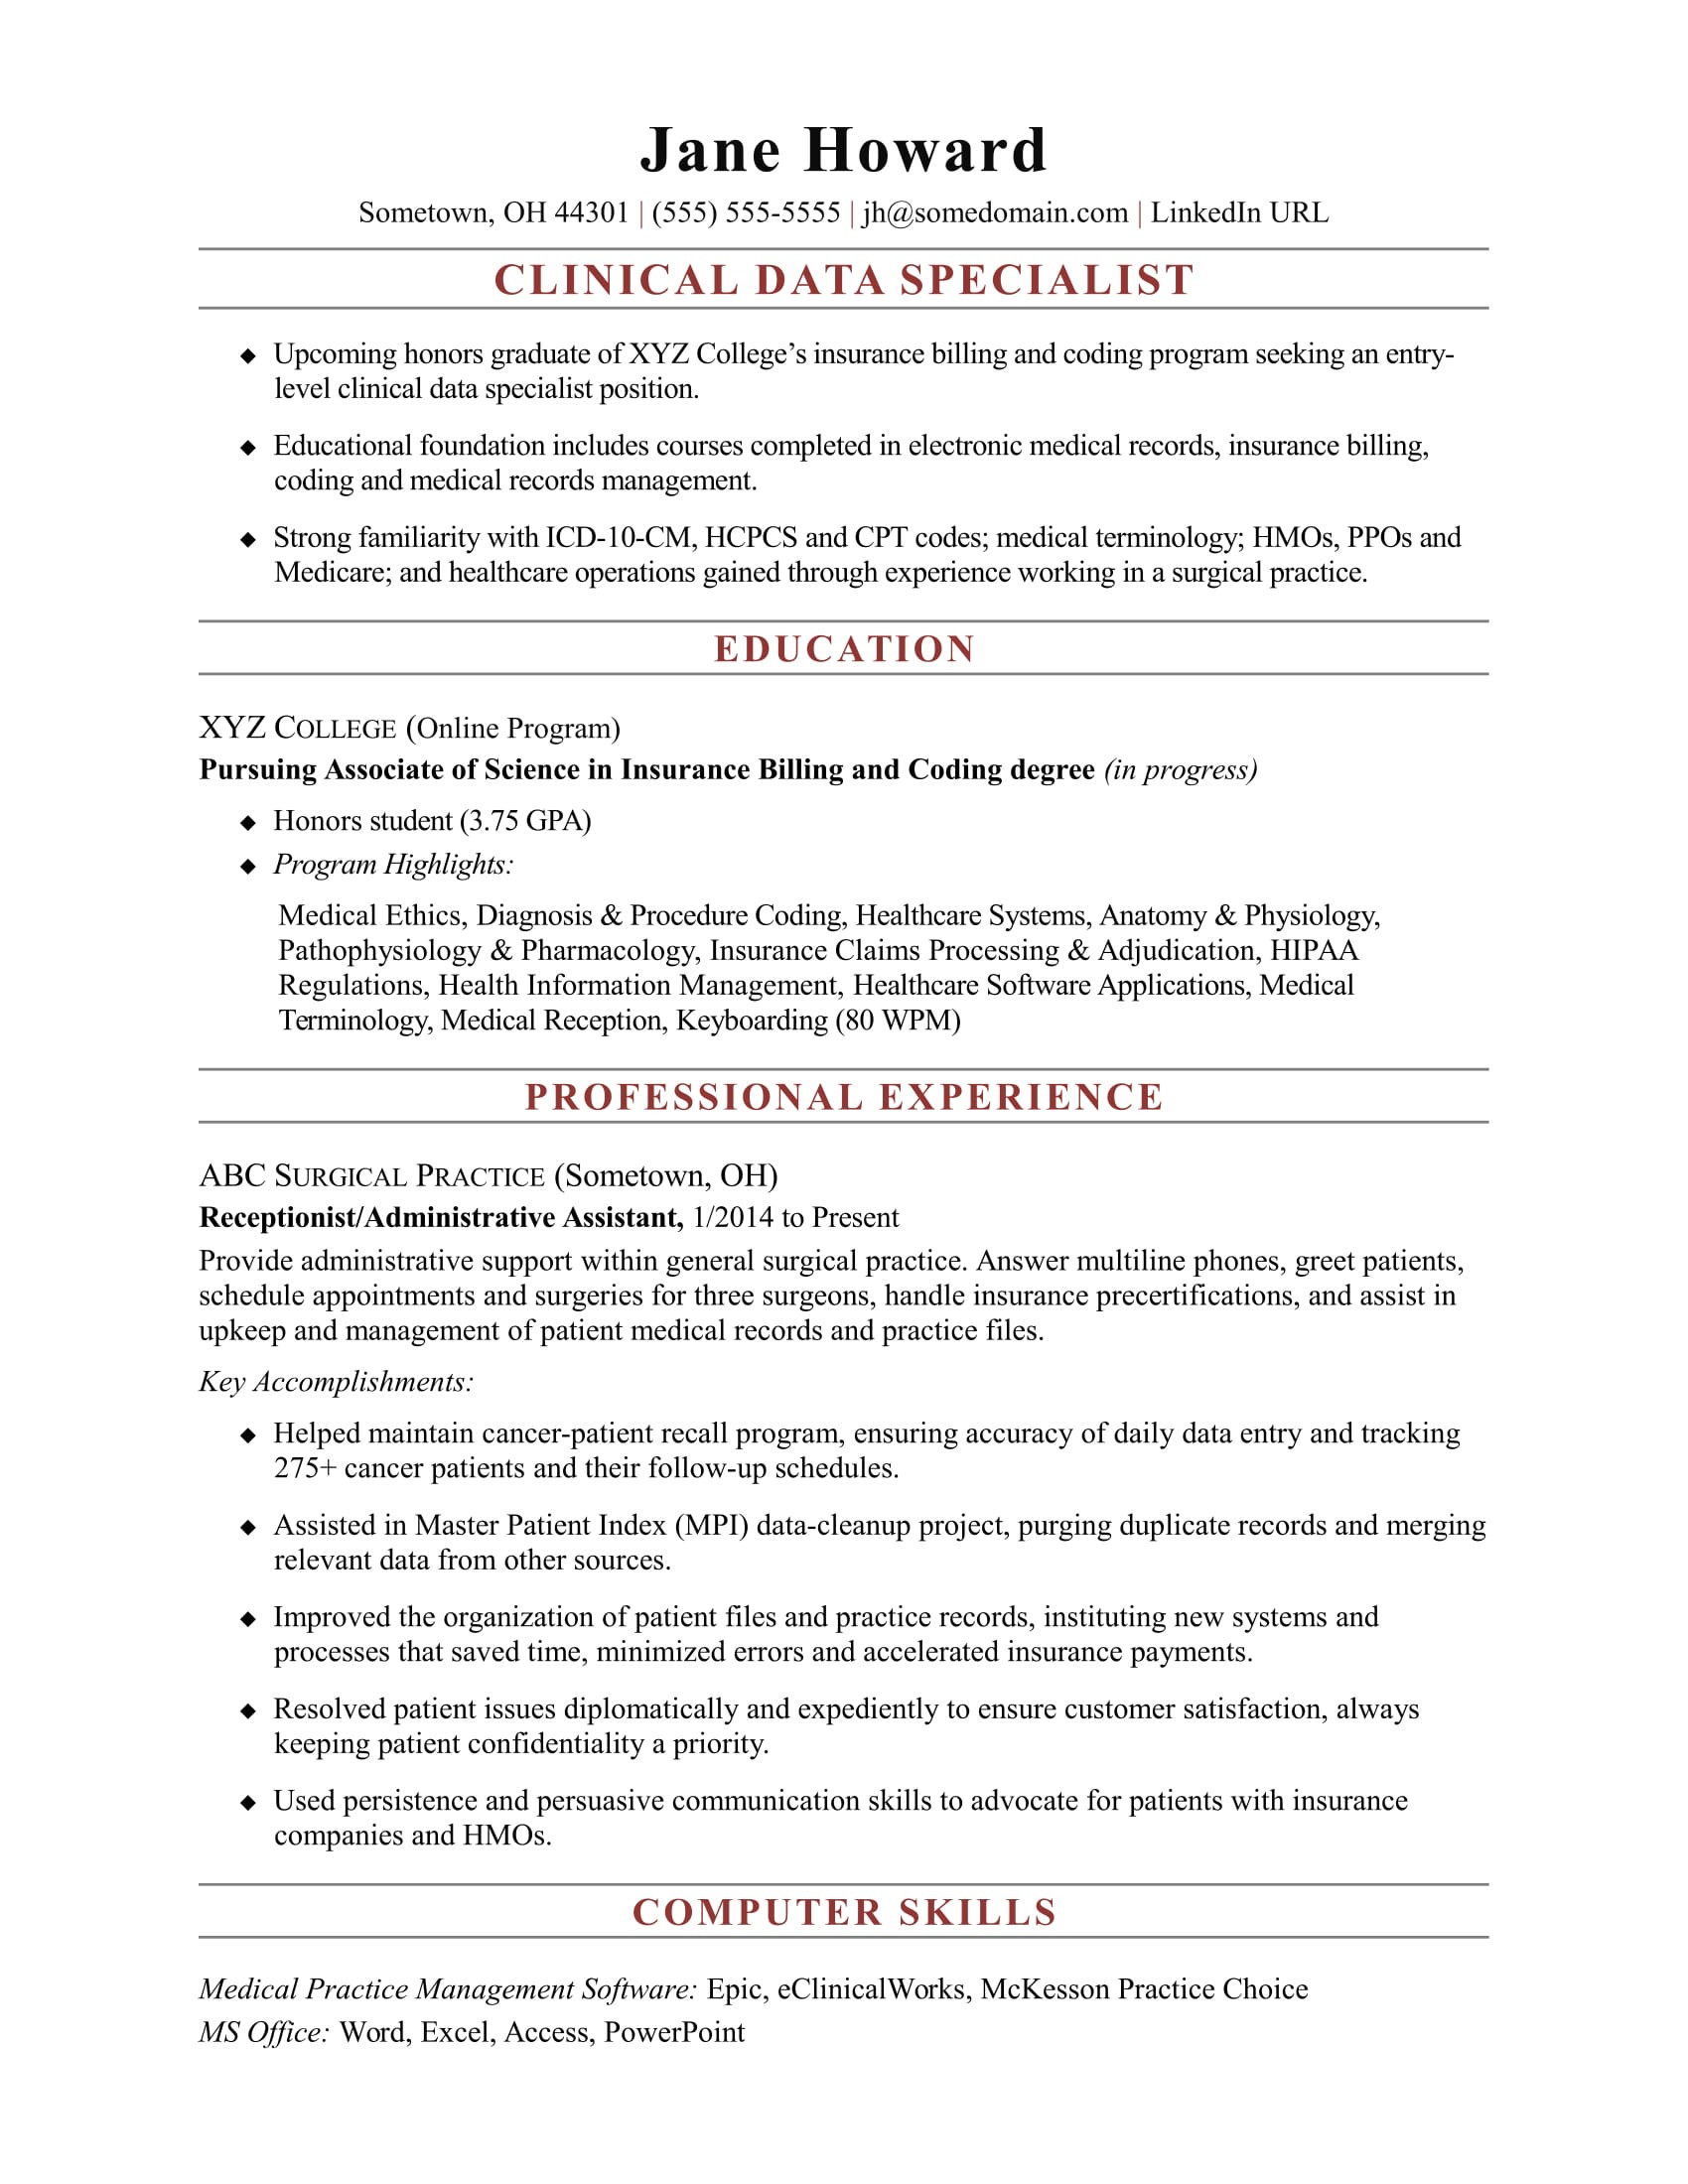 Emr Ehr Healthcare Analyst Resume Samples Entry-level Clinical Data Specialist Resume Sample Monster.com